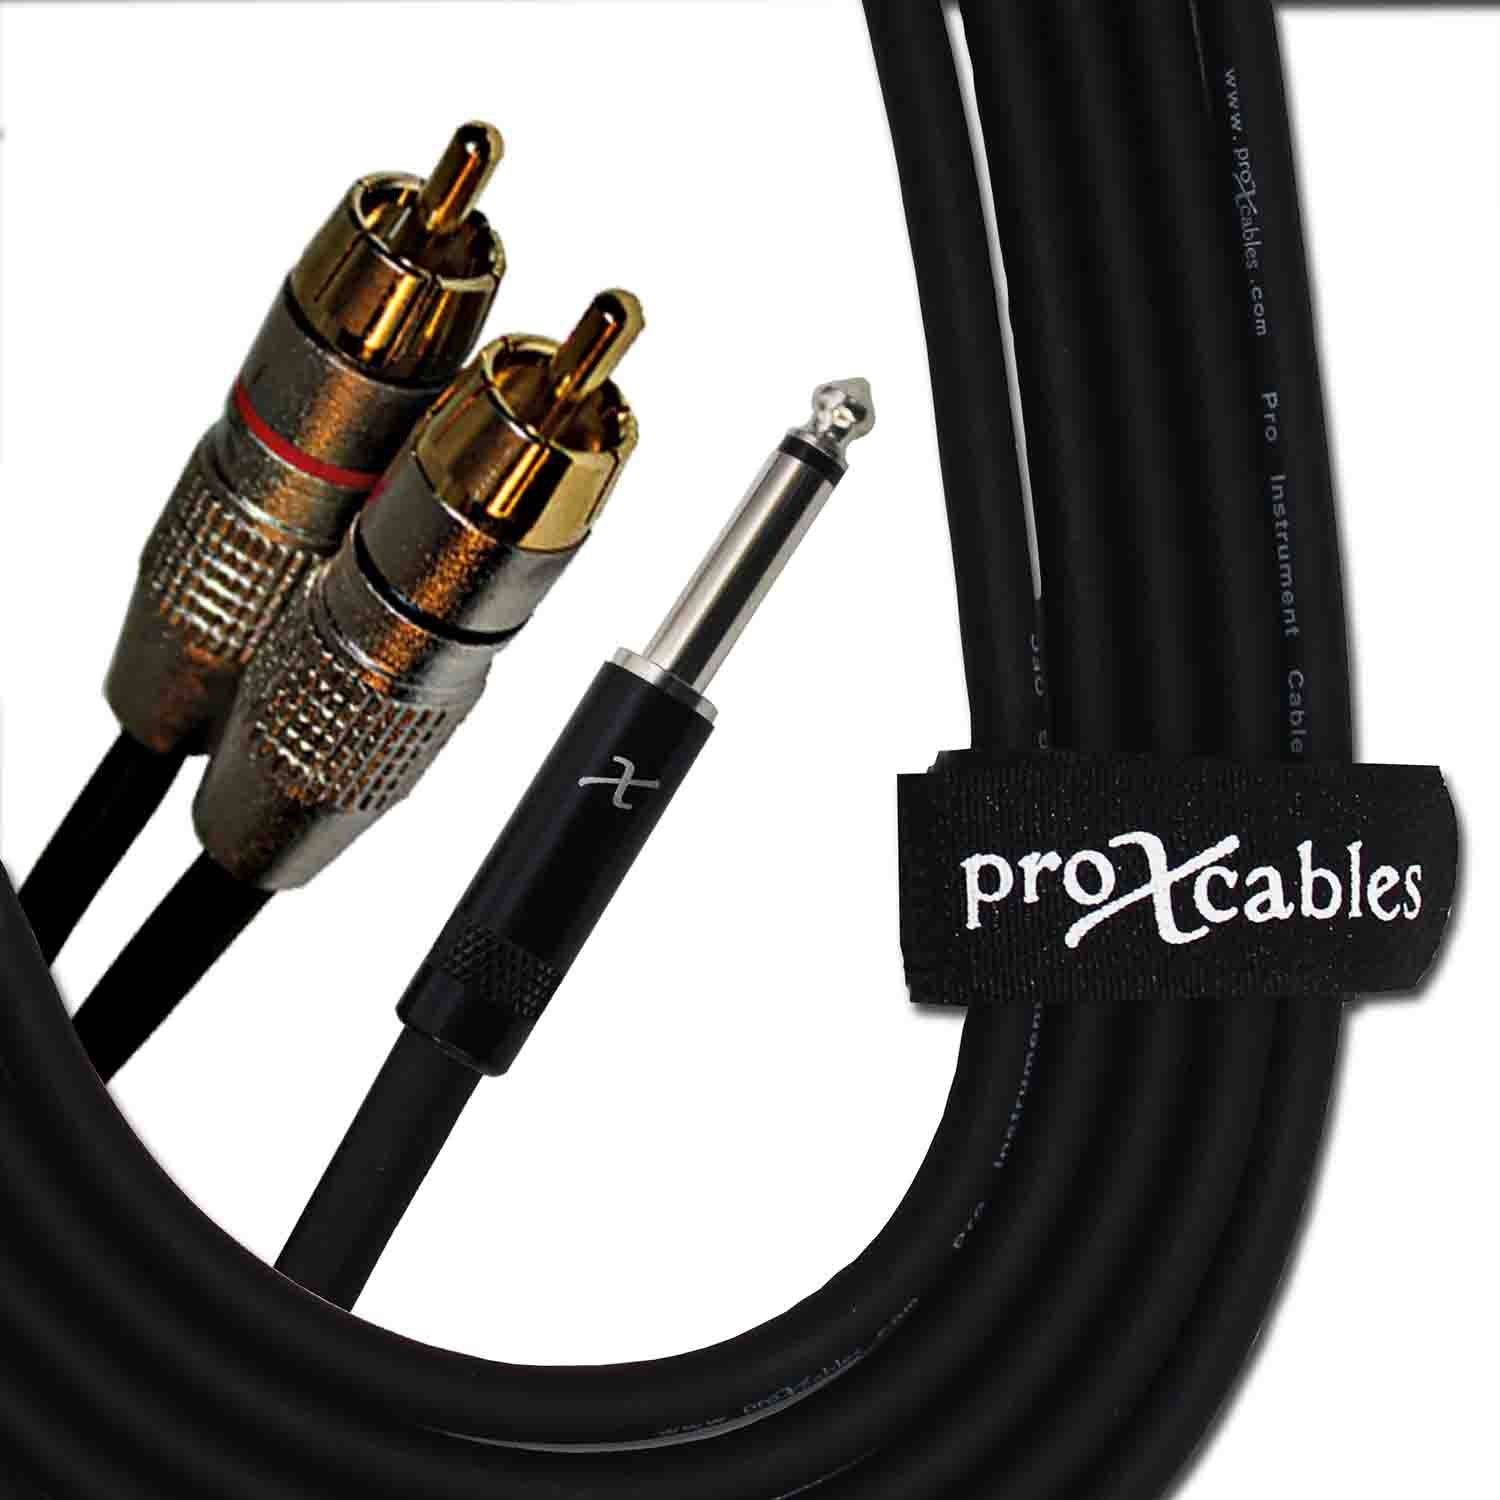 Prox XC-PYR03 Unbalanced 1/4" TS-M to Dual RCA-M High Performance Audio Y Cable - 3 Feet - Hollywood DJ